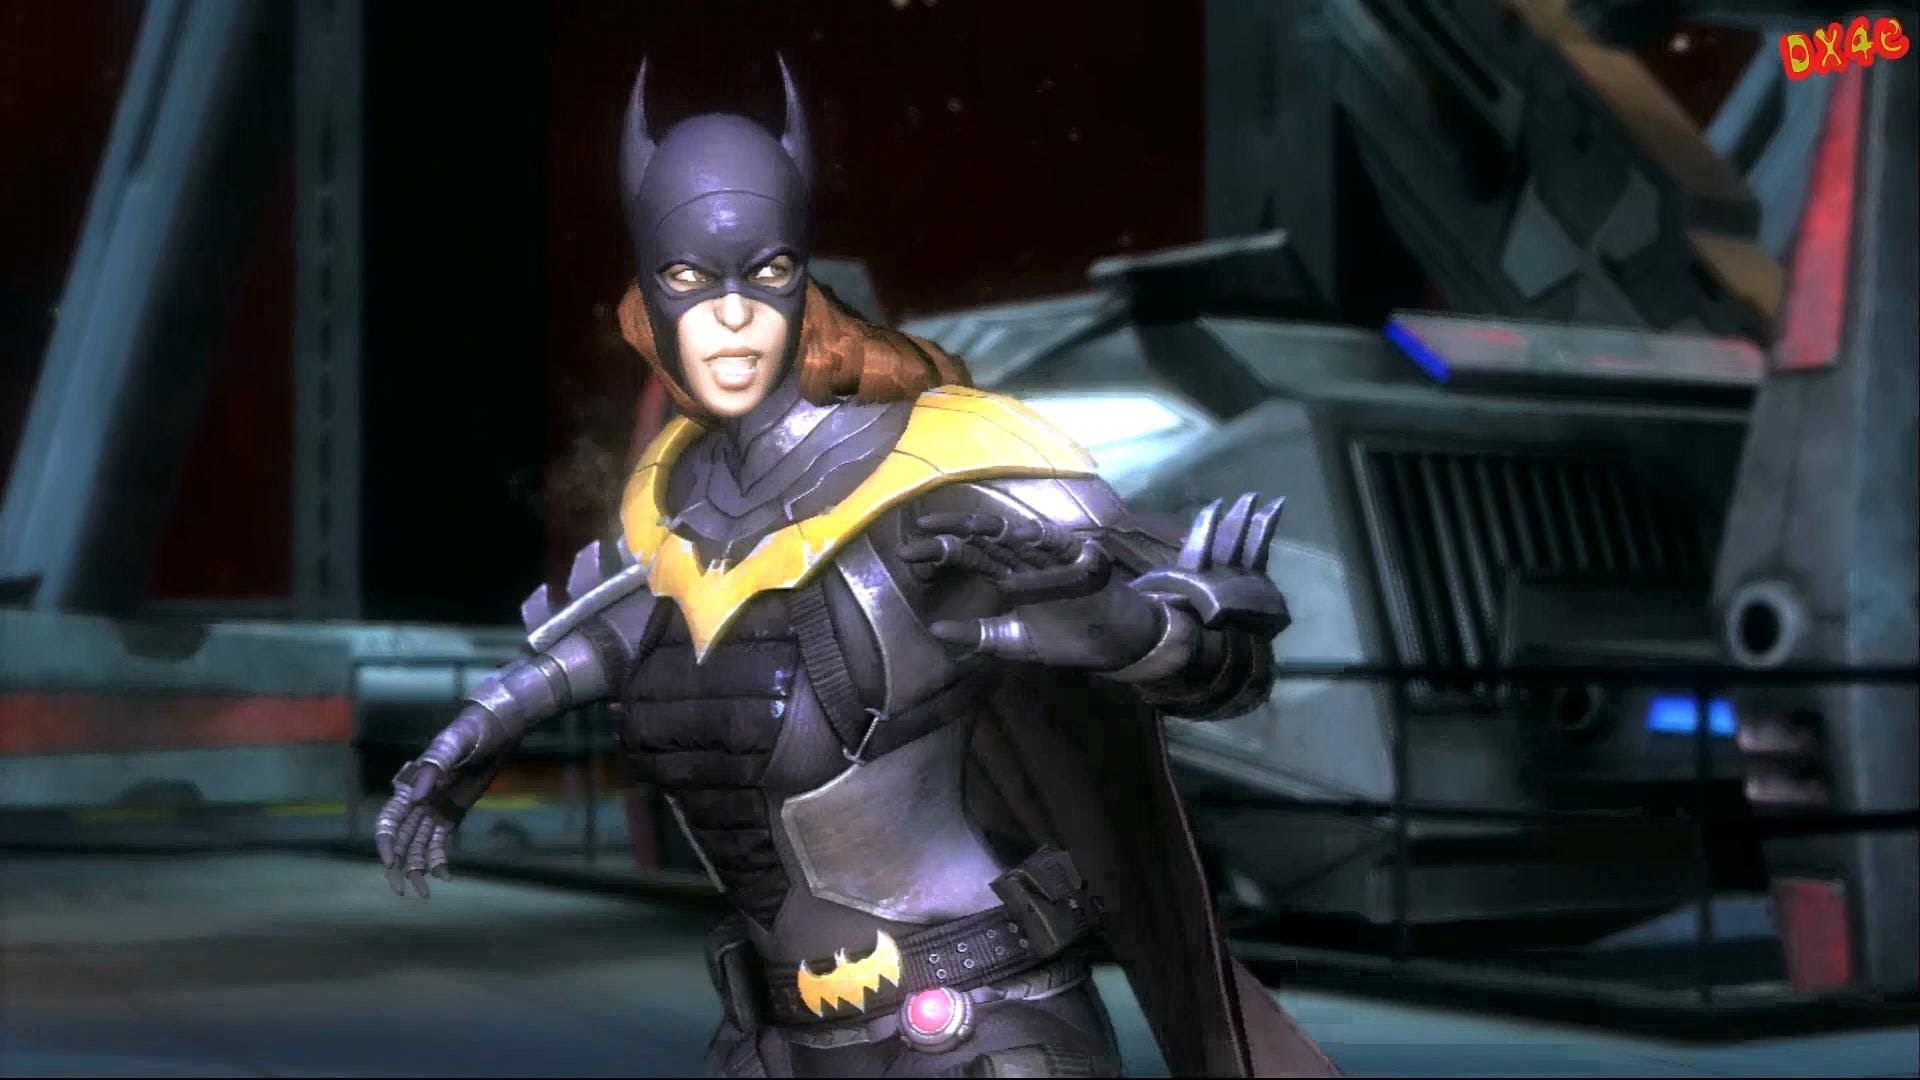 Injustice Batgirl